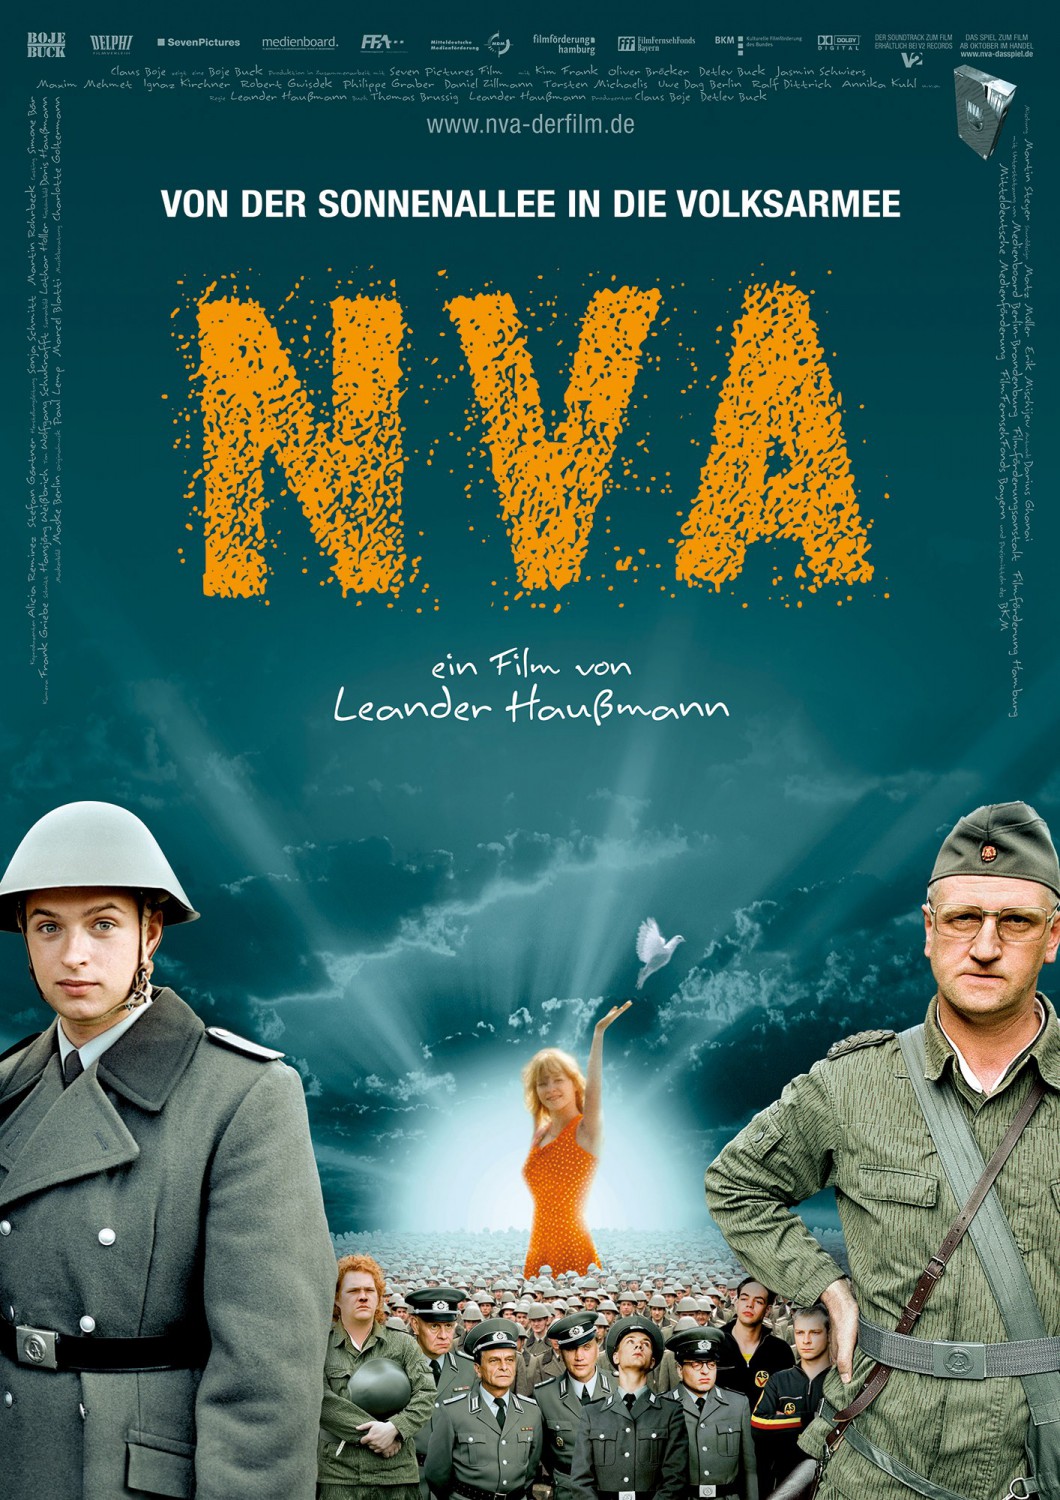 Extra Large Movie Poster Image for NVA 